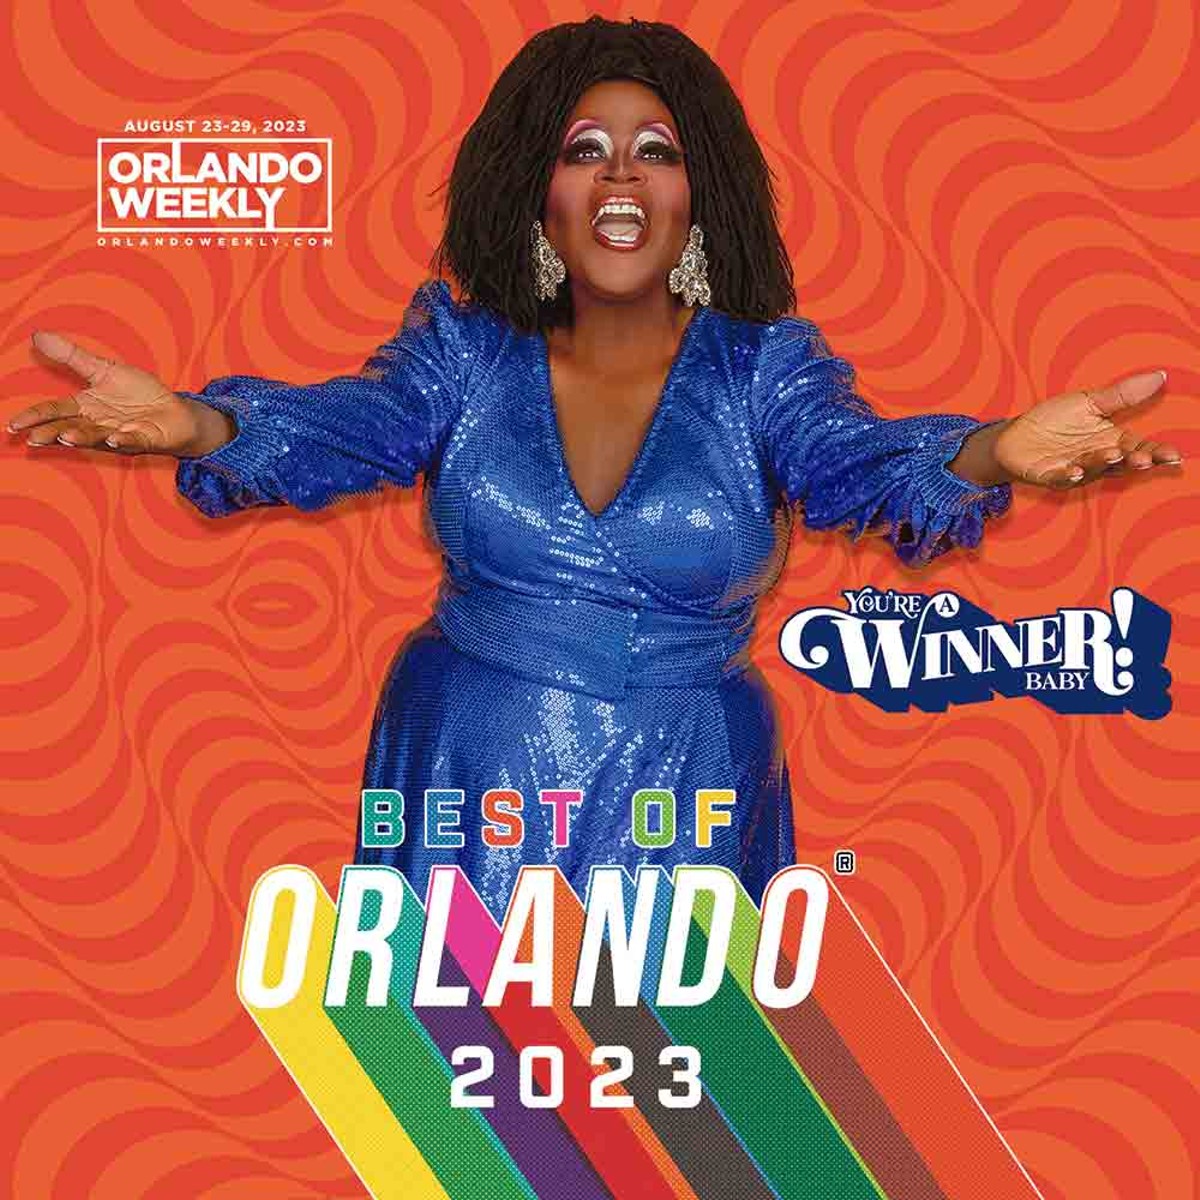 Orlando Weekly - June 14, 2023 by Chava Communications - Issuu